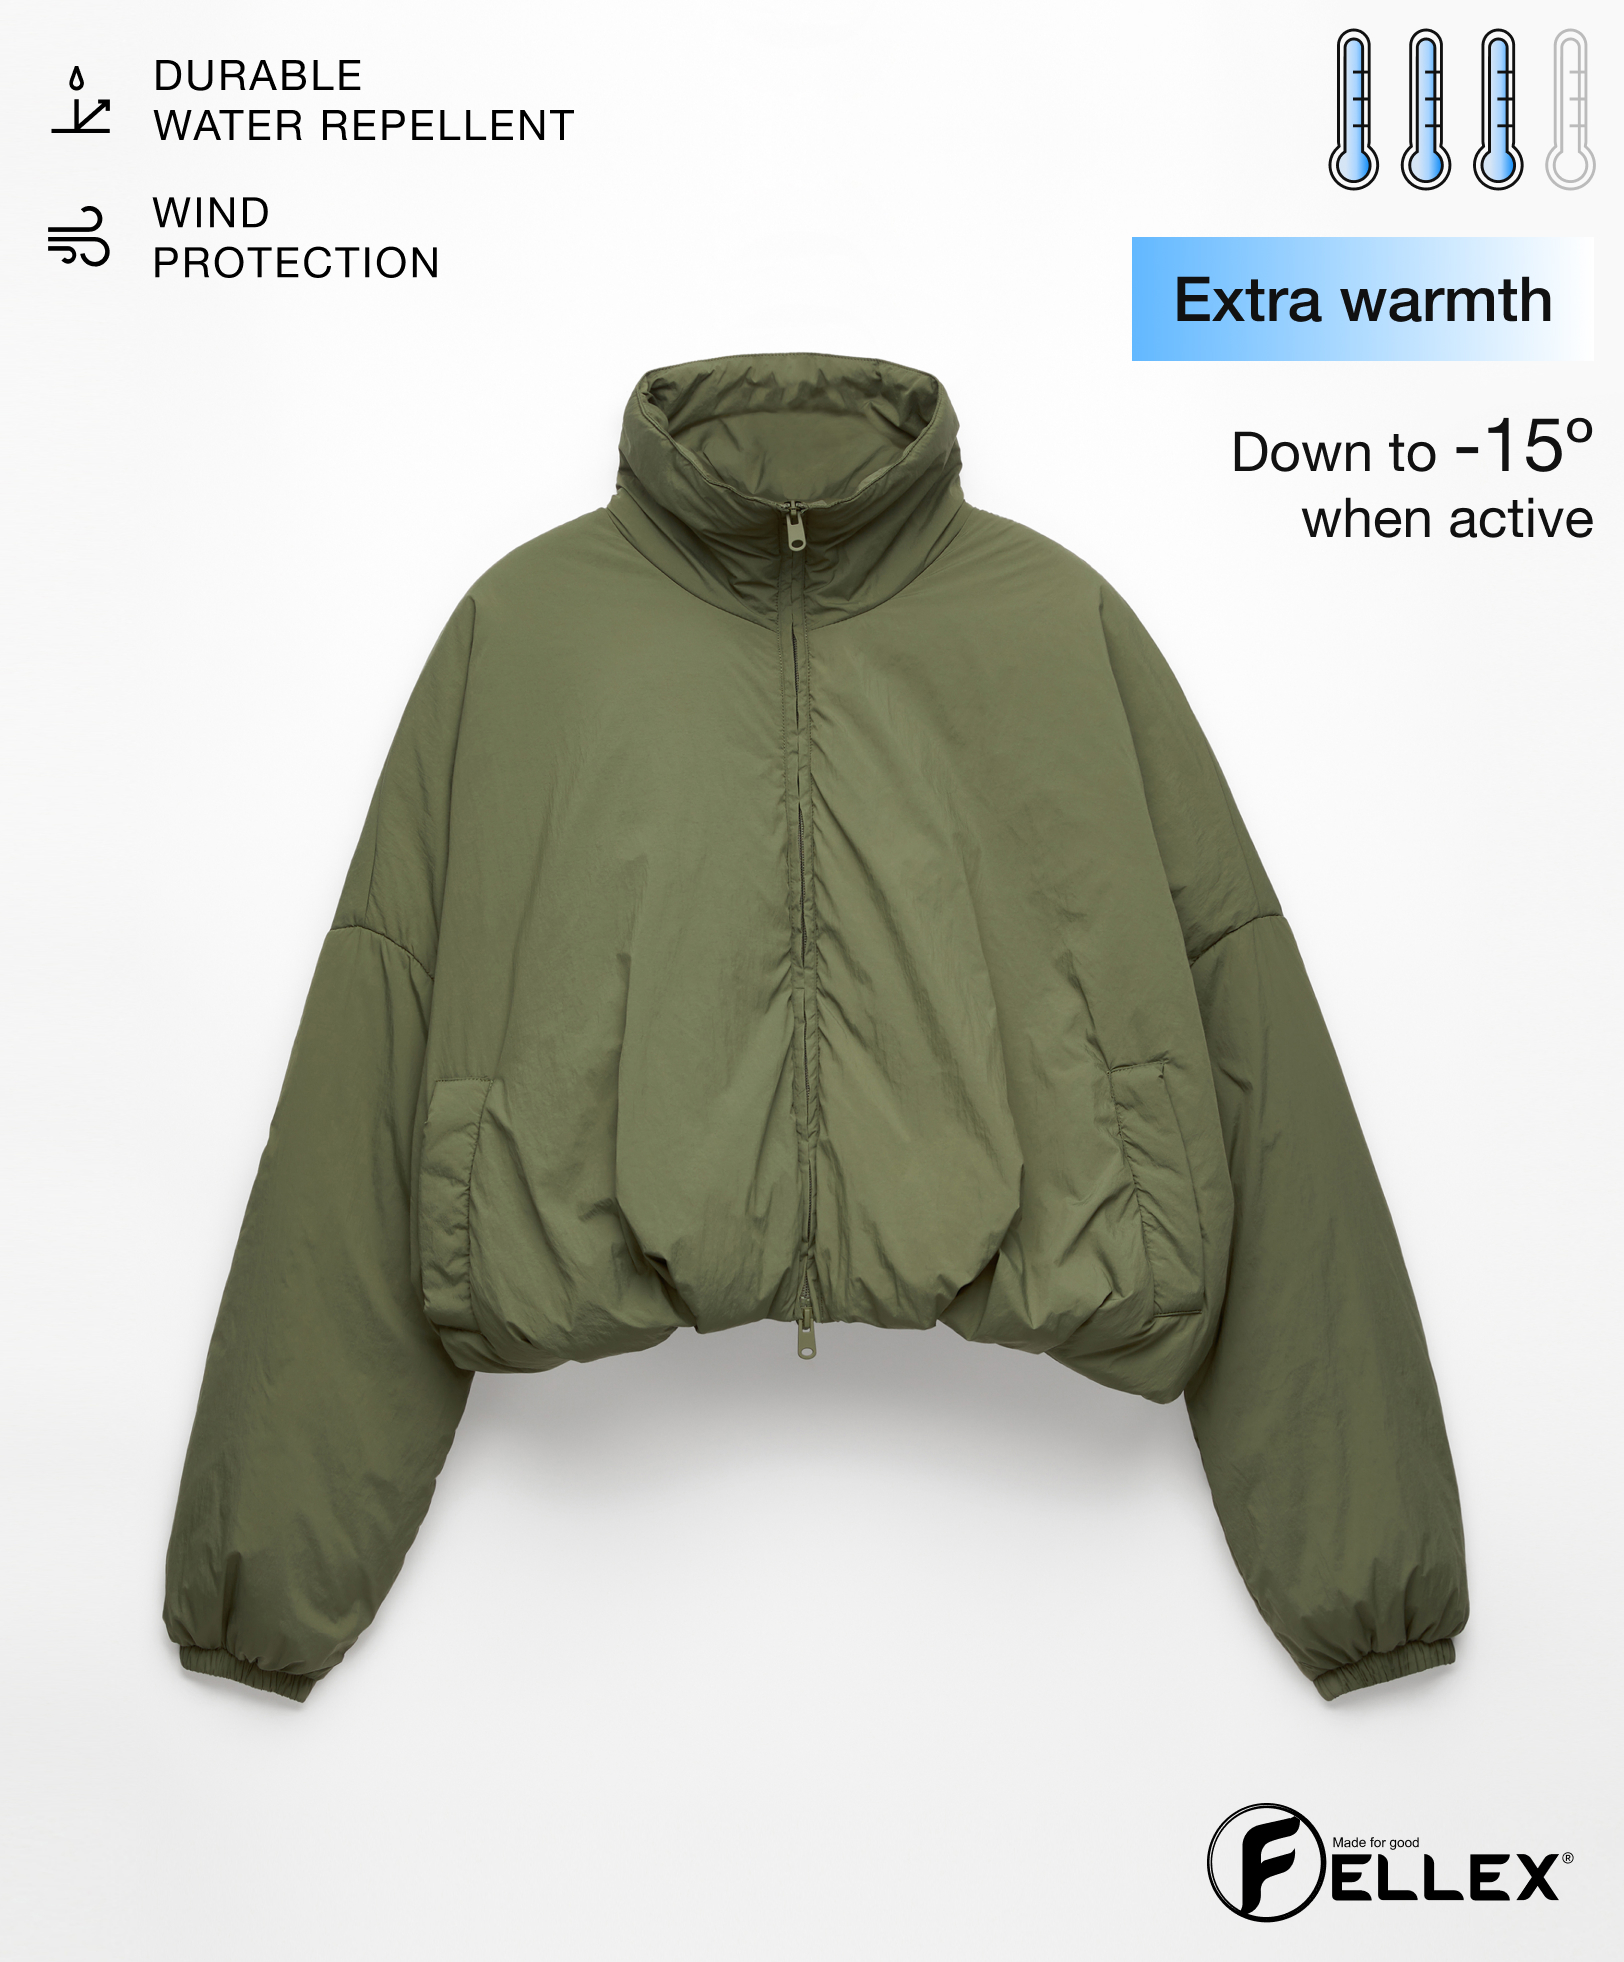 Lightweight, water-repellent FELLEX® AEROGEL bomber jacket